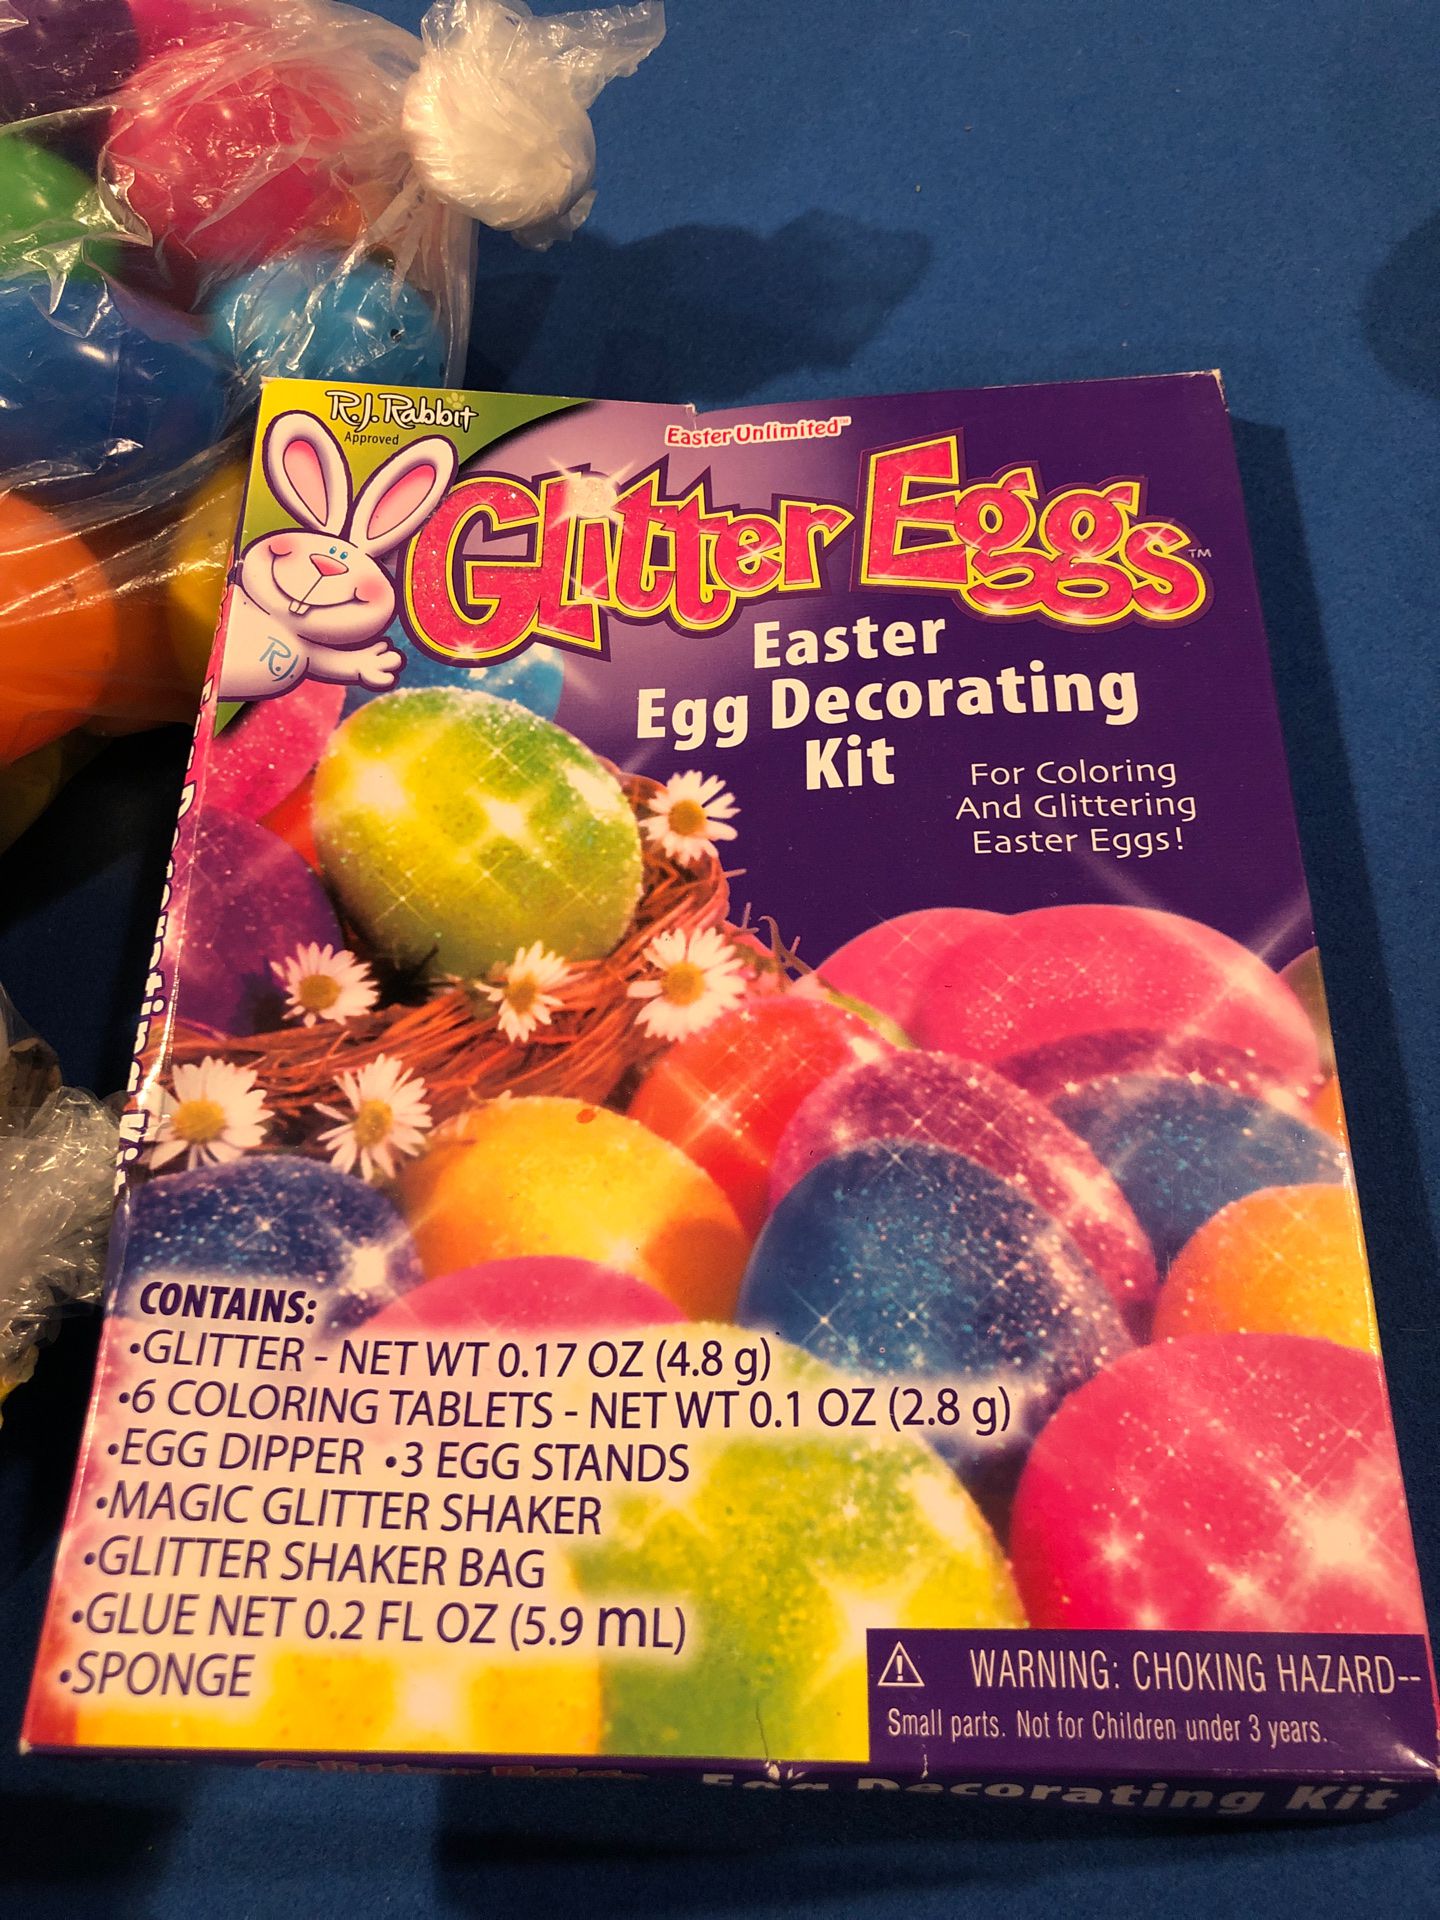 Easter eggs, plastic for treats, plastic for decorating, etc